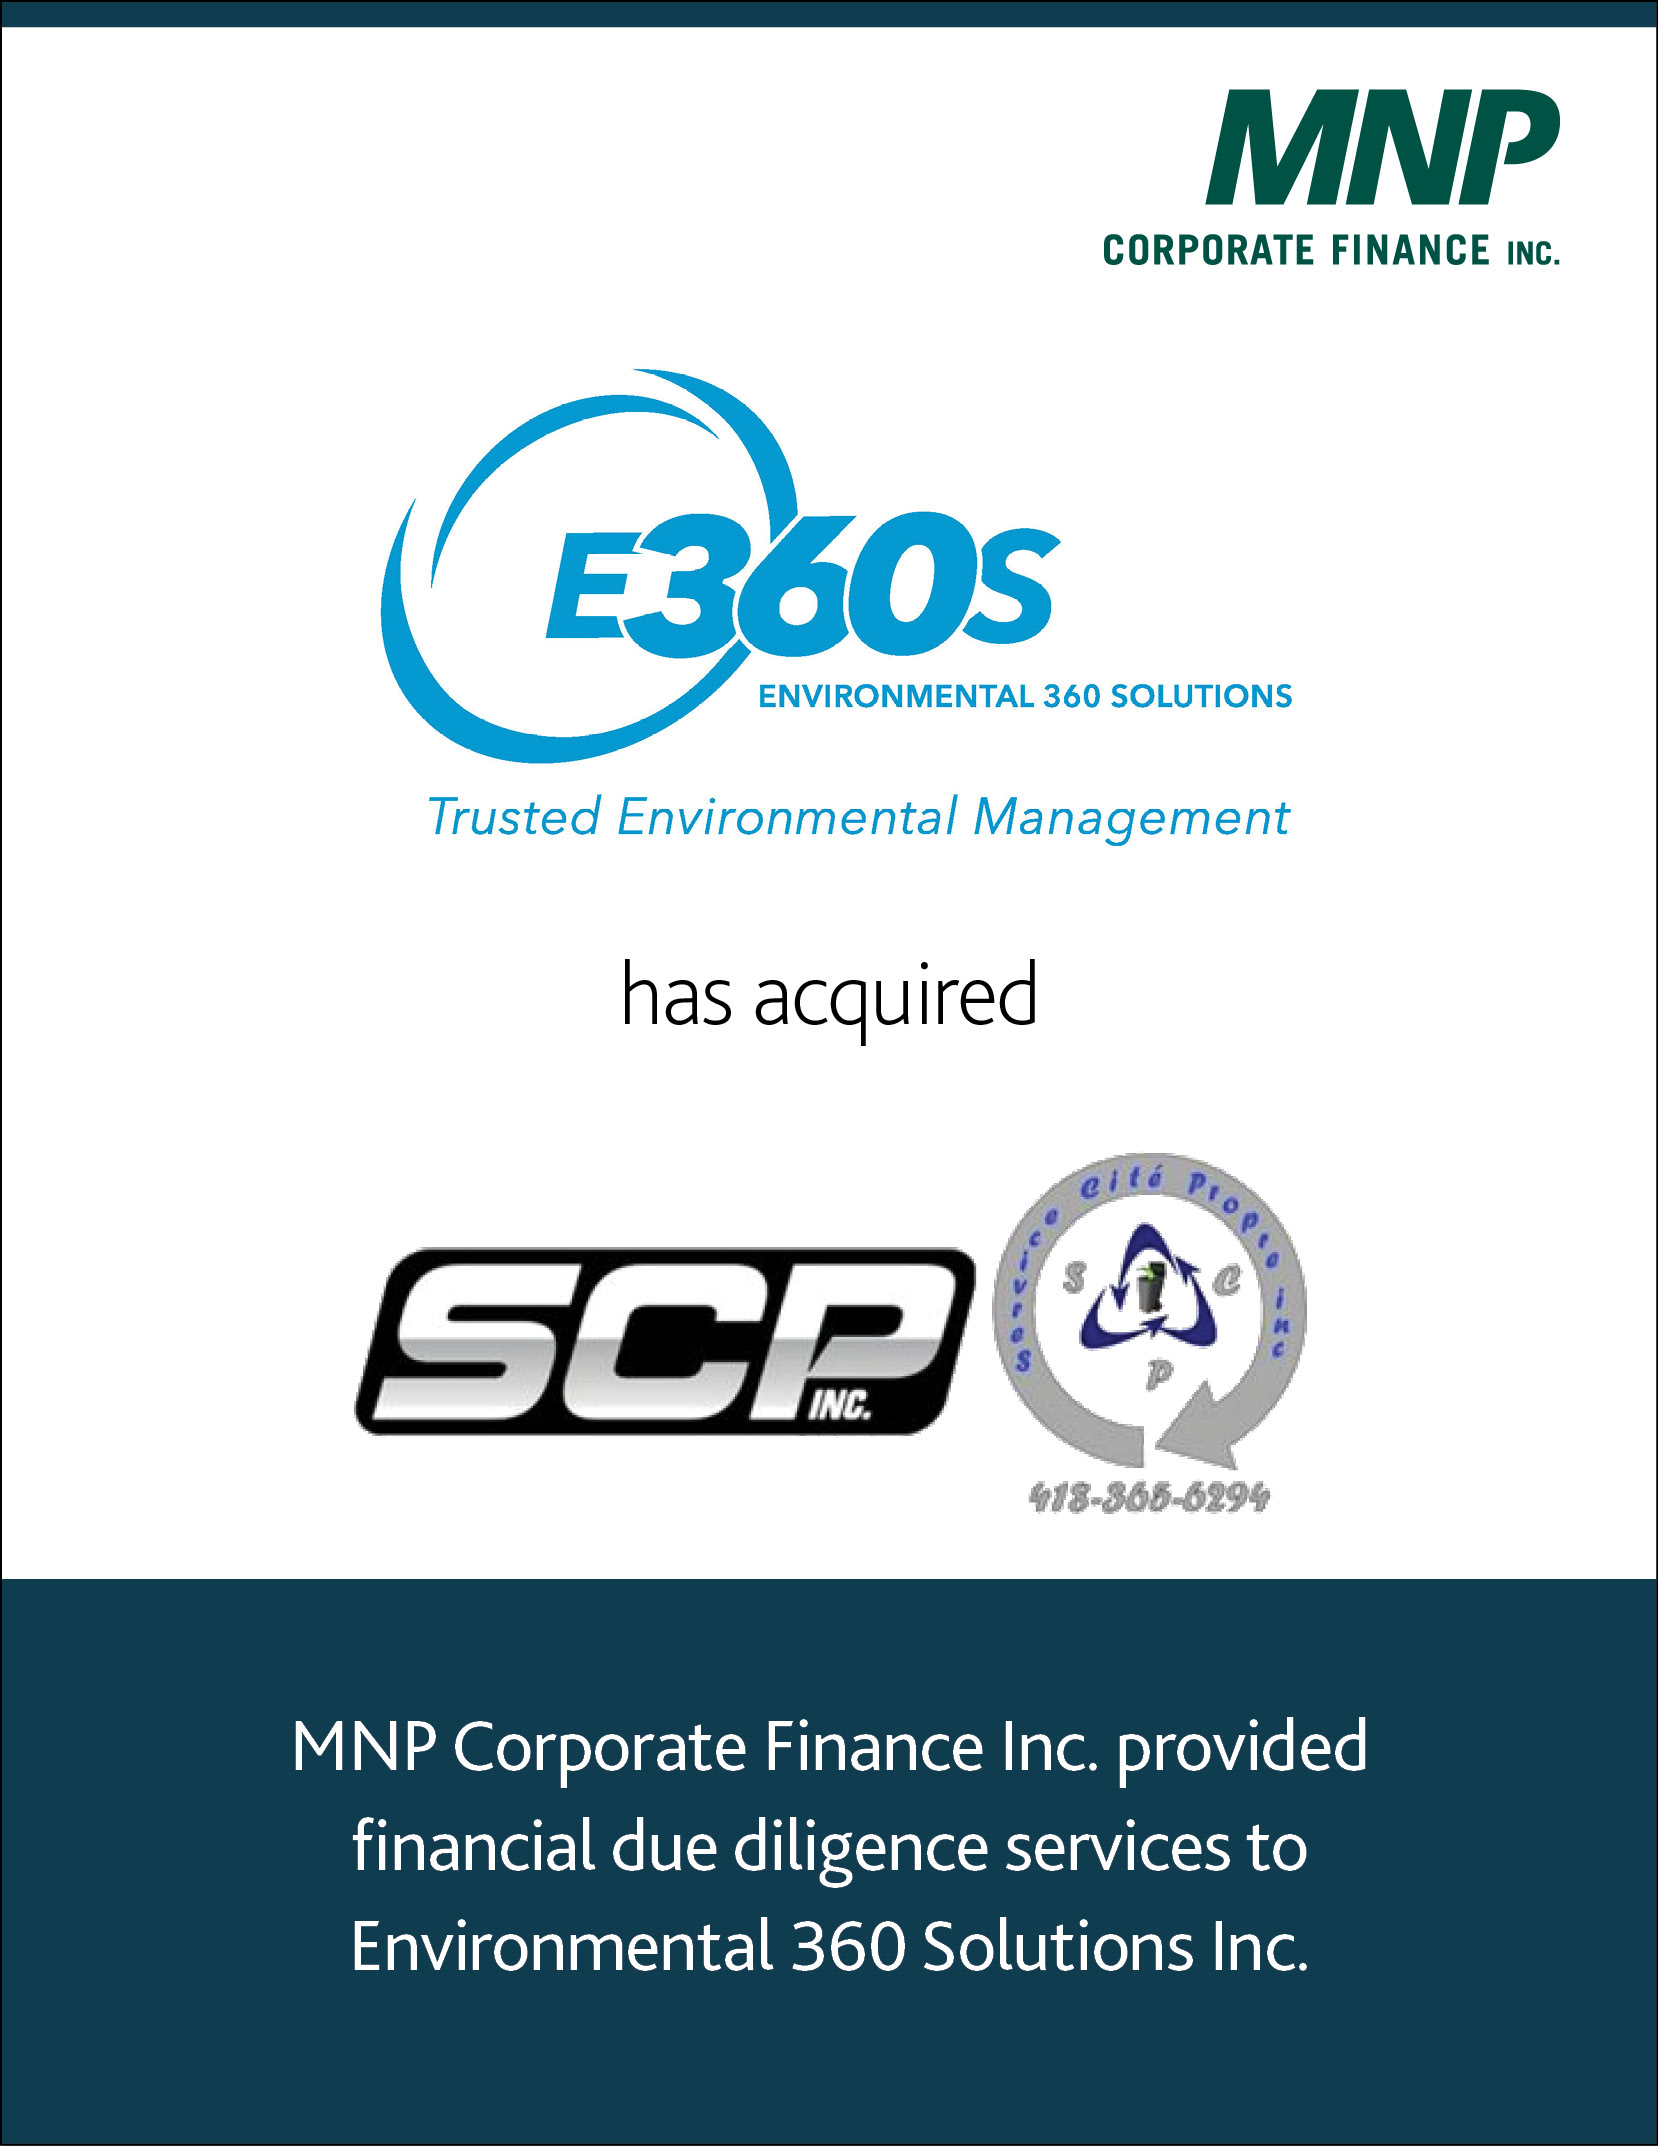 Environmental 360 Solutions Lt SCP Inc and Service Cité Propre Inc